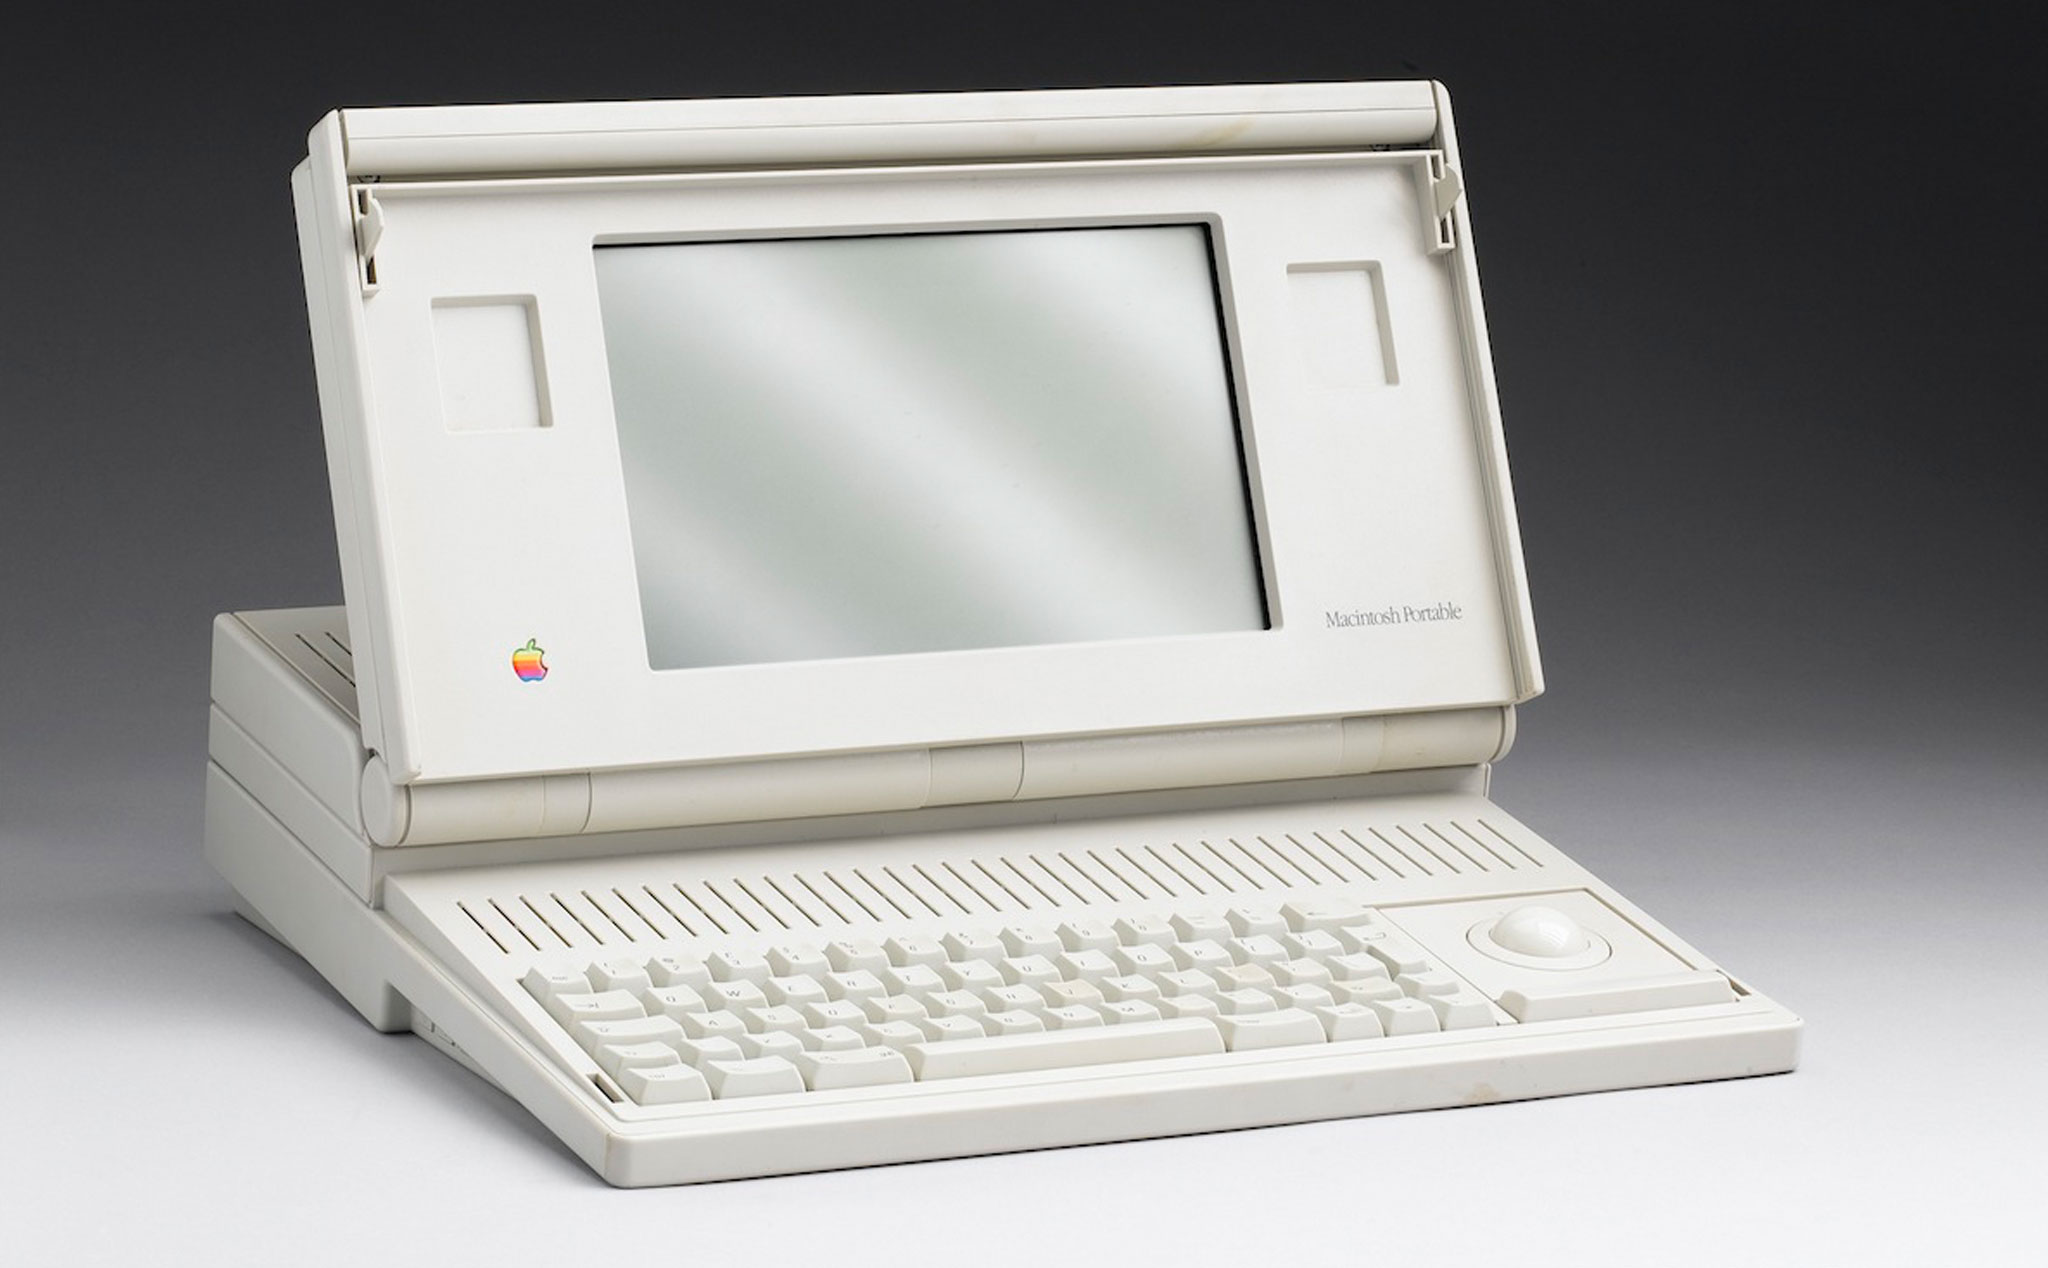 Macintosh Portable.3.jpg